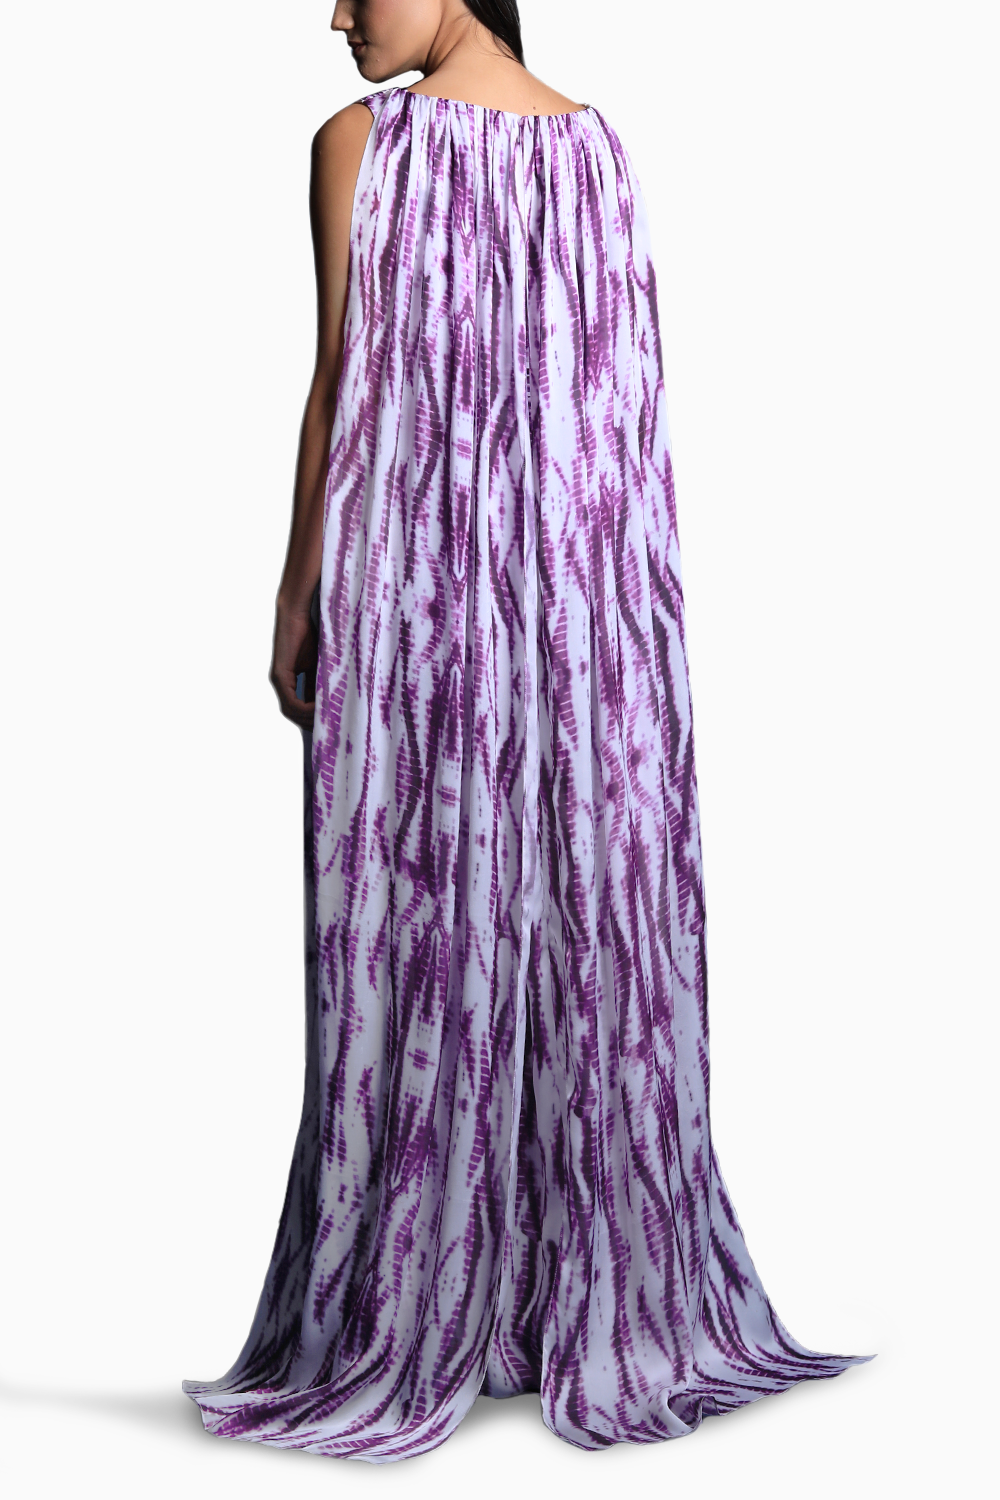 Lavender Dream Gown